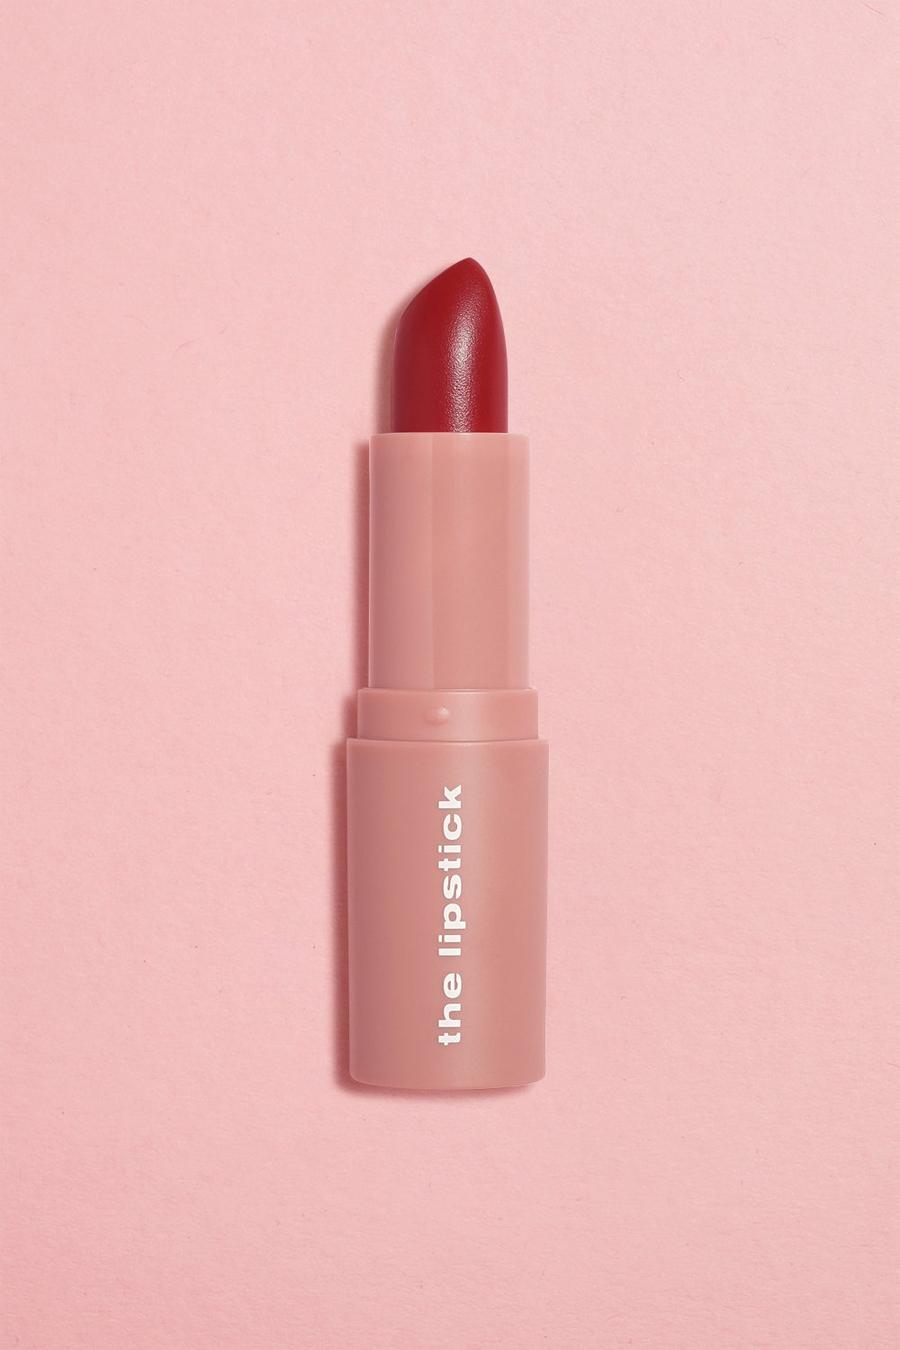 Boohoo Beauty The Lipstick - Red